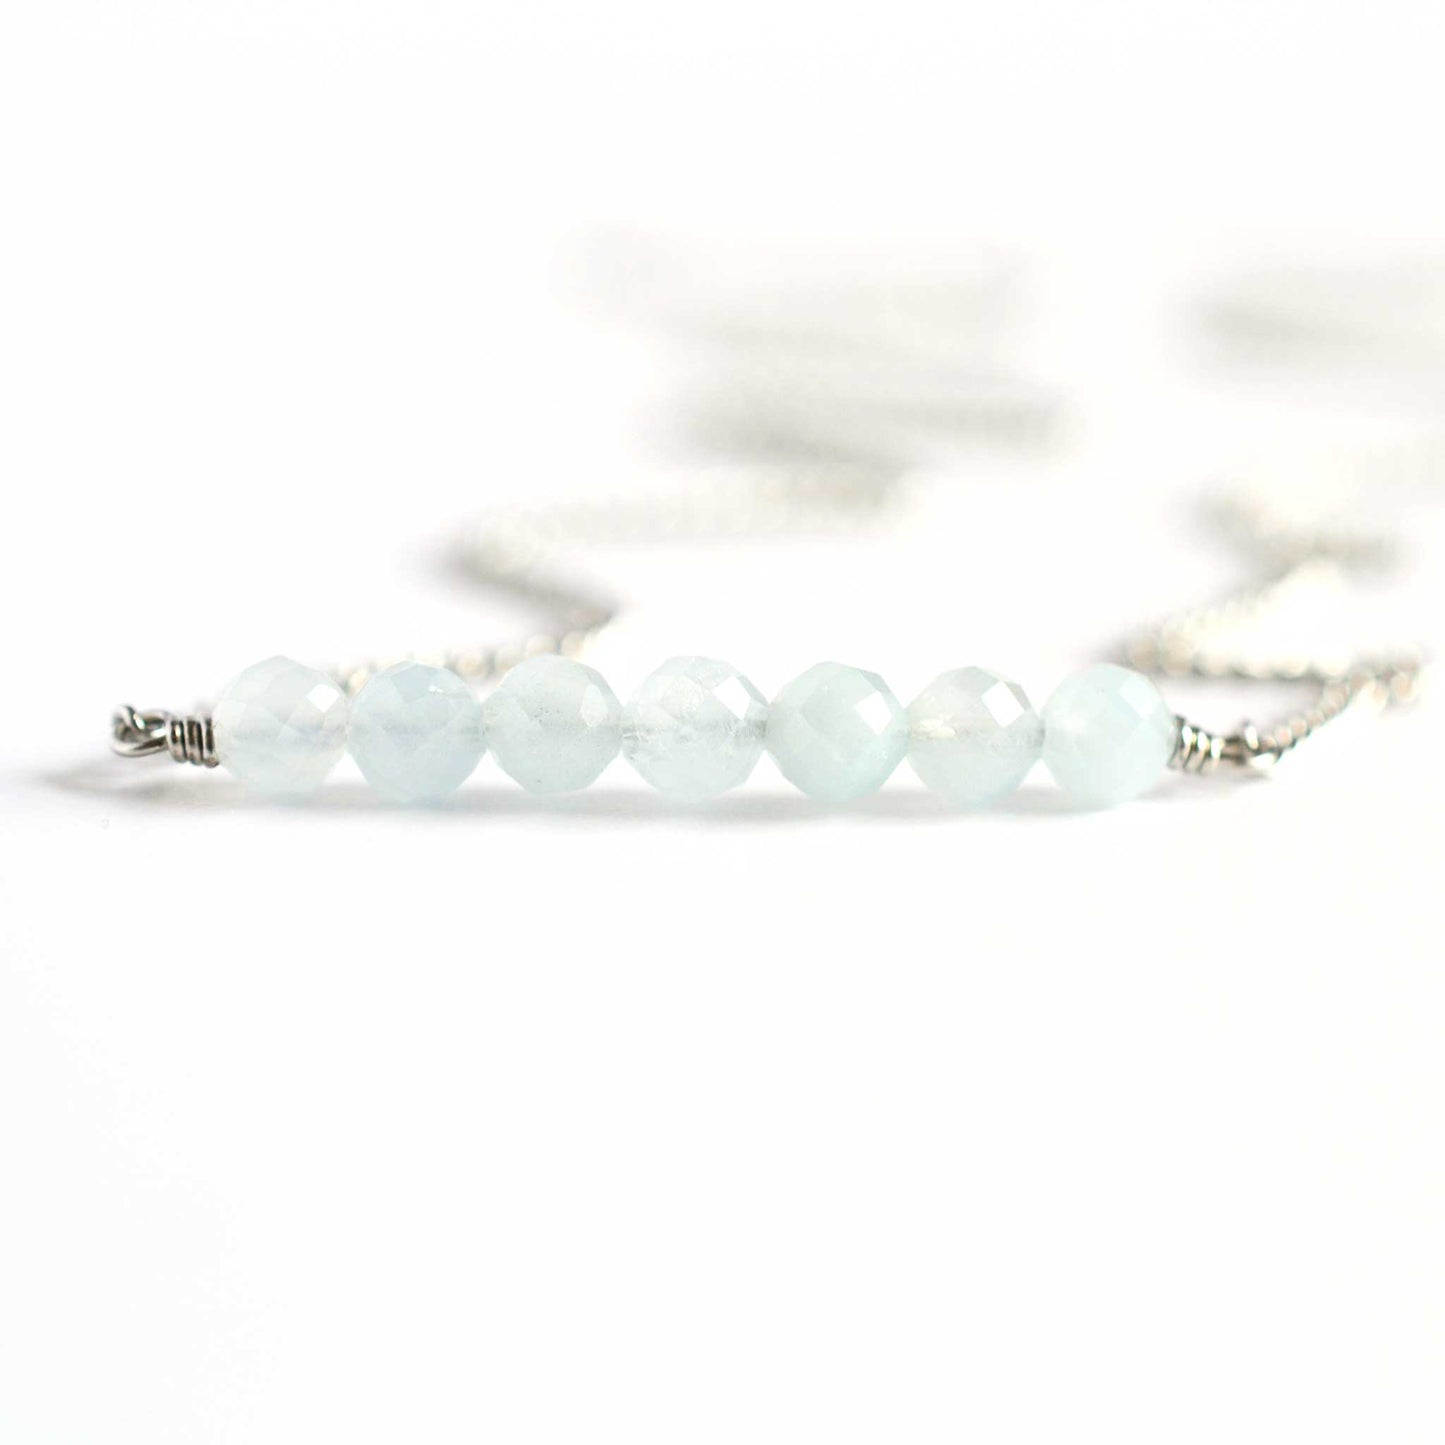 Close up of Aquamarine necklace with seven small round faceted pale blue Aquamarine gemstones